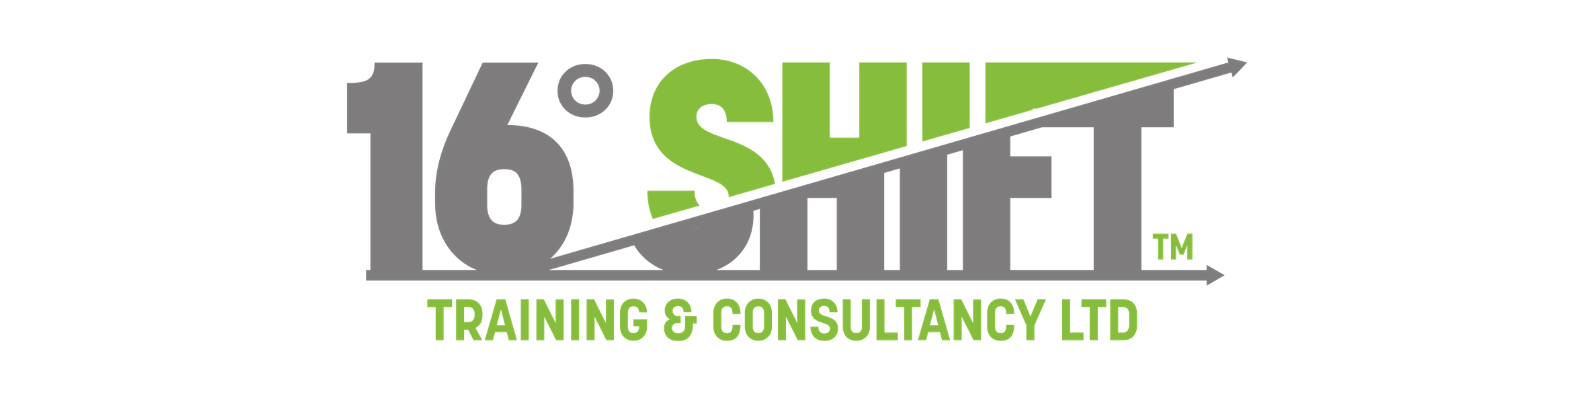 16 Degree Shift Training and Consultancy Ltd Logo